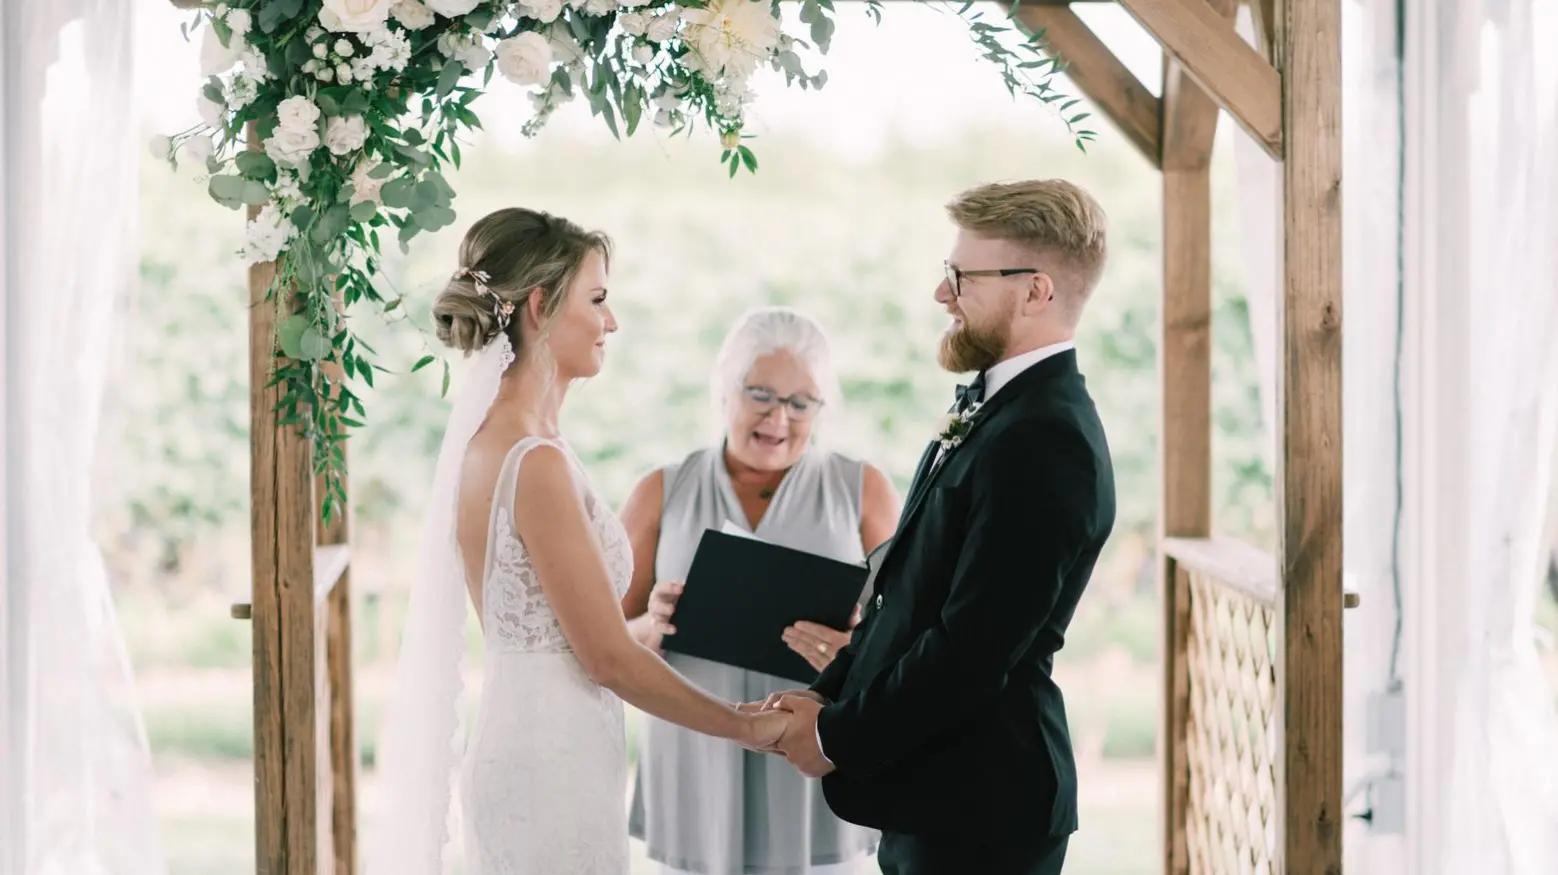 Wedding ceremony at Bella Terra Vineyards in Niagara-on-the-Lake.